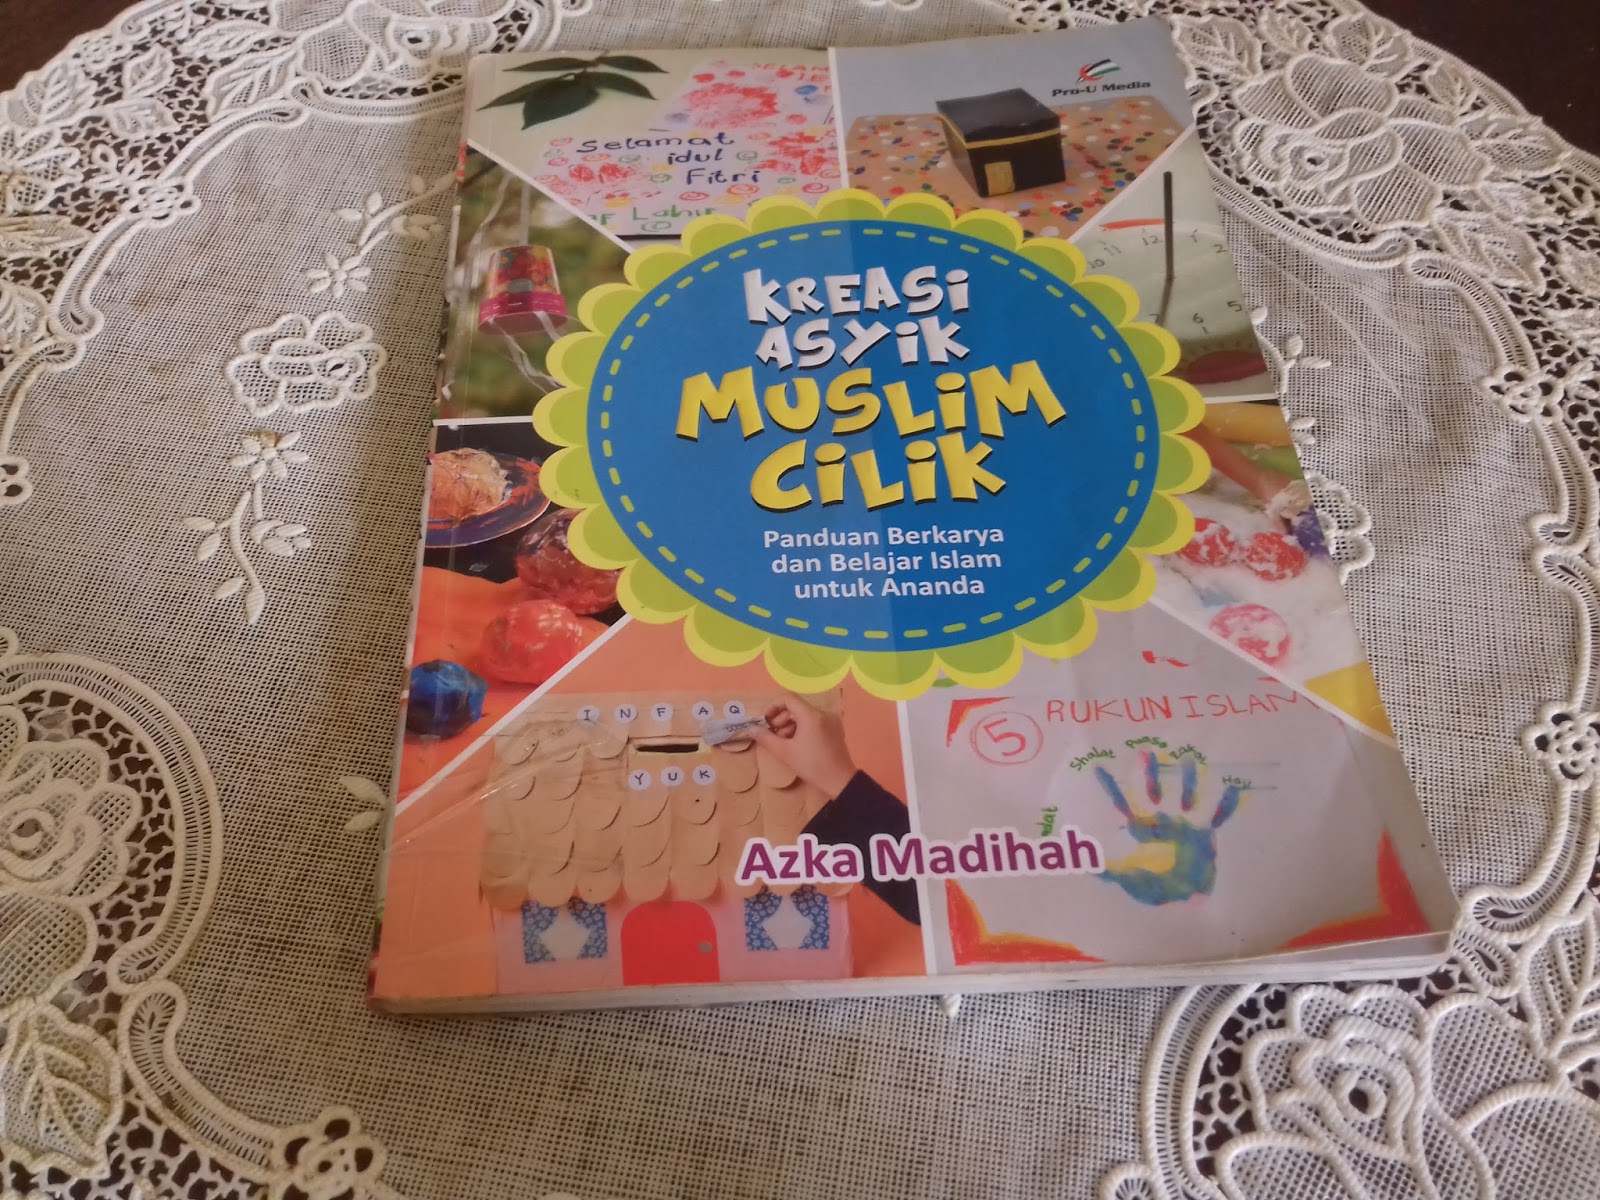 Buku "Kreasi Asyik Muslim Cilik"  Learn Love Life